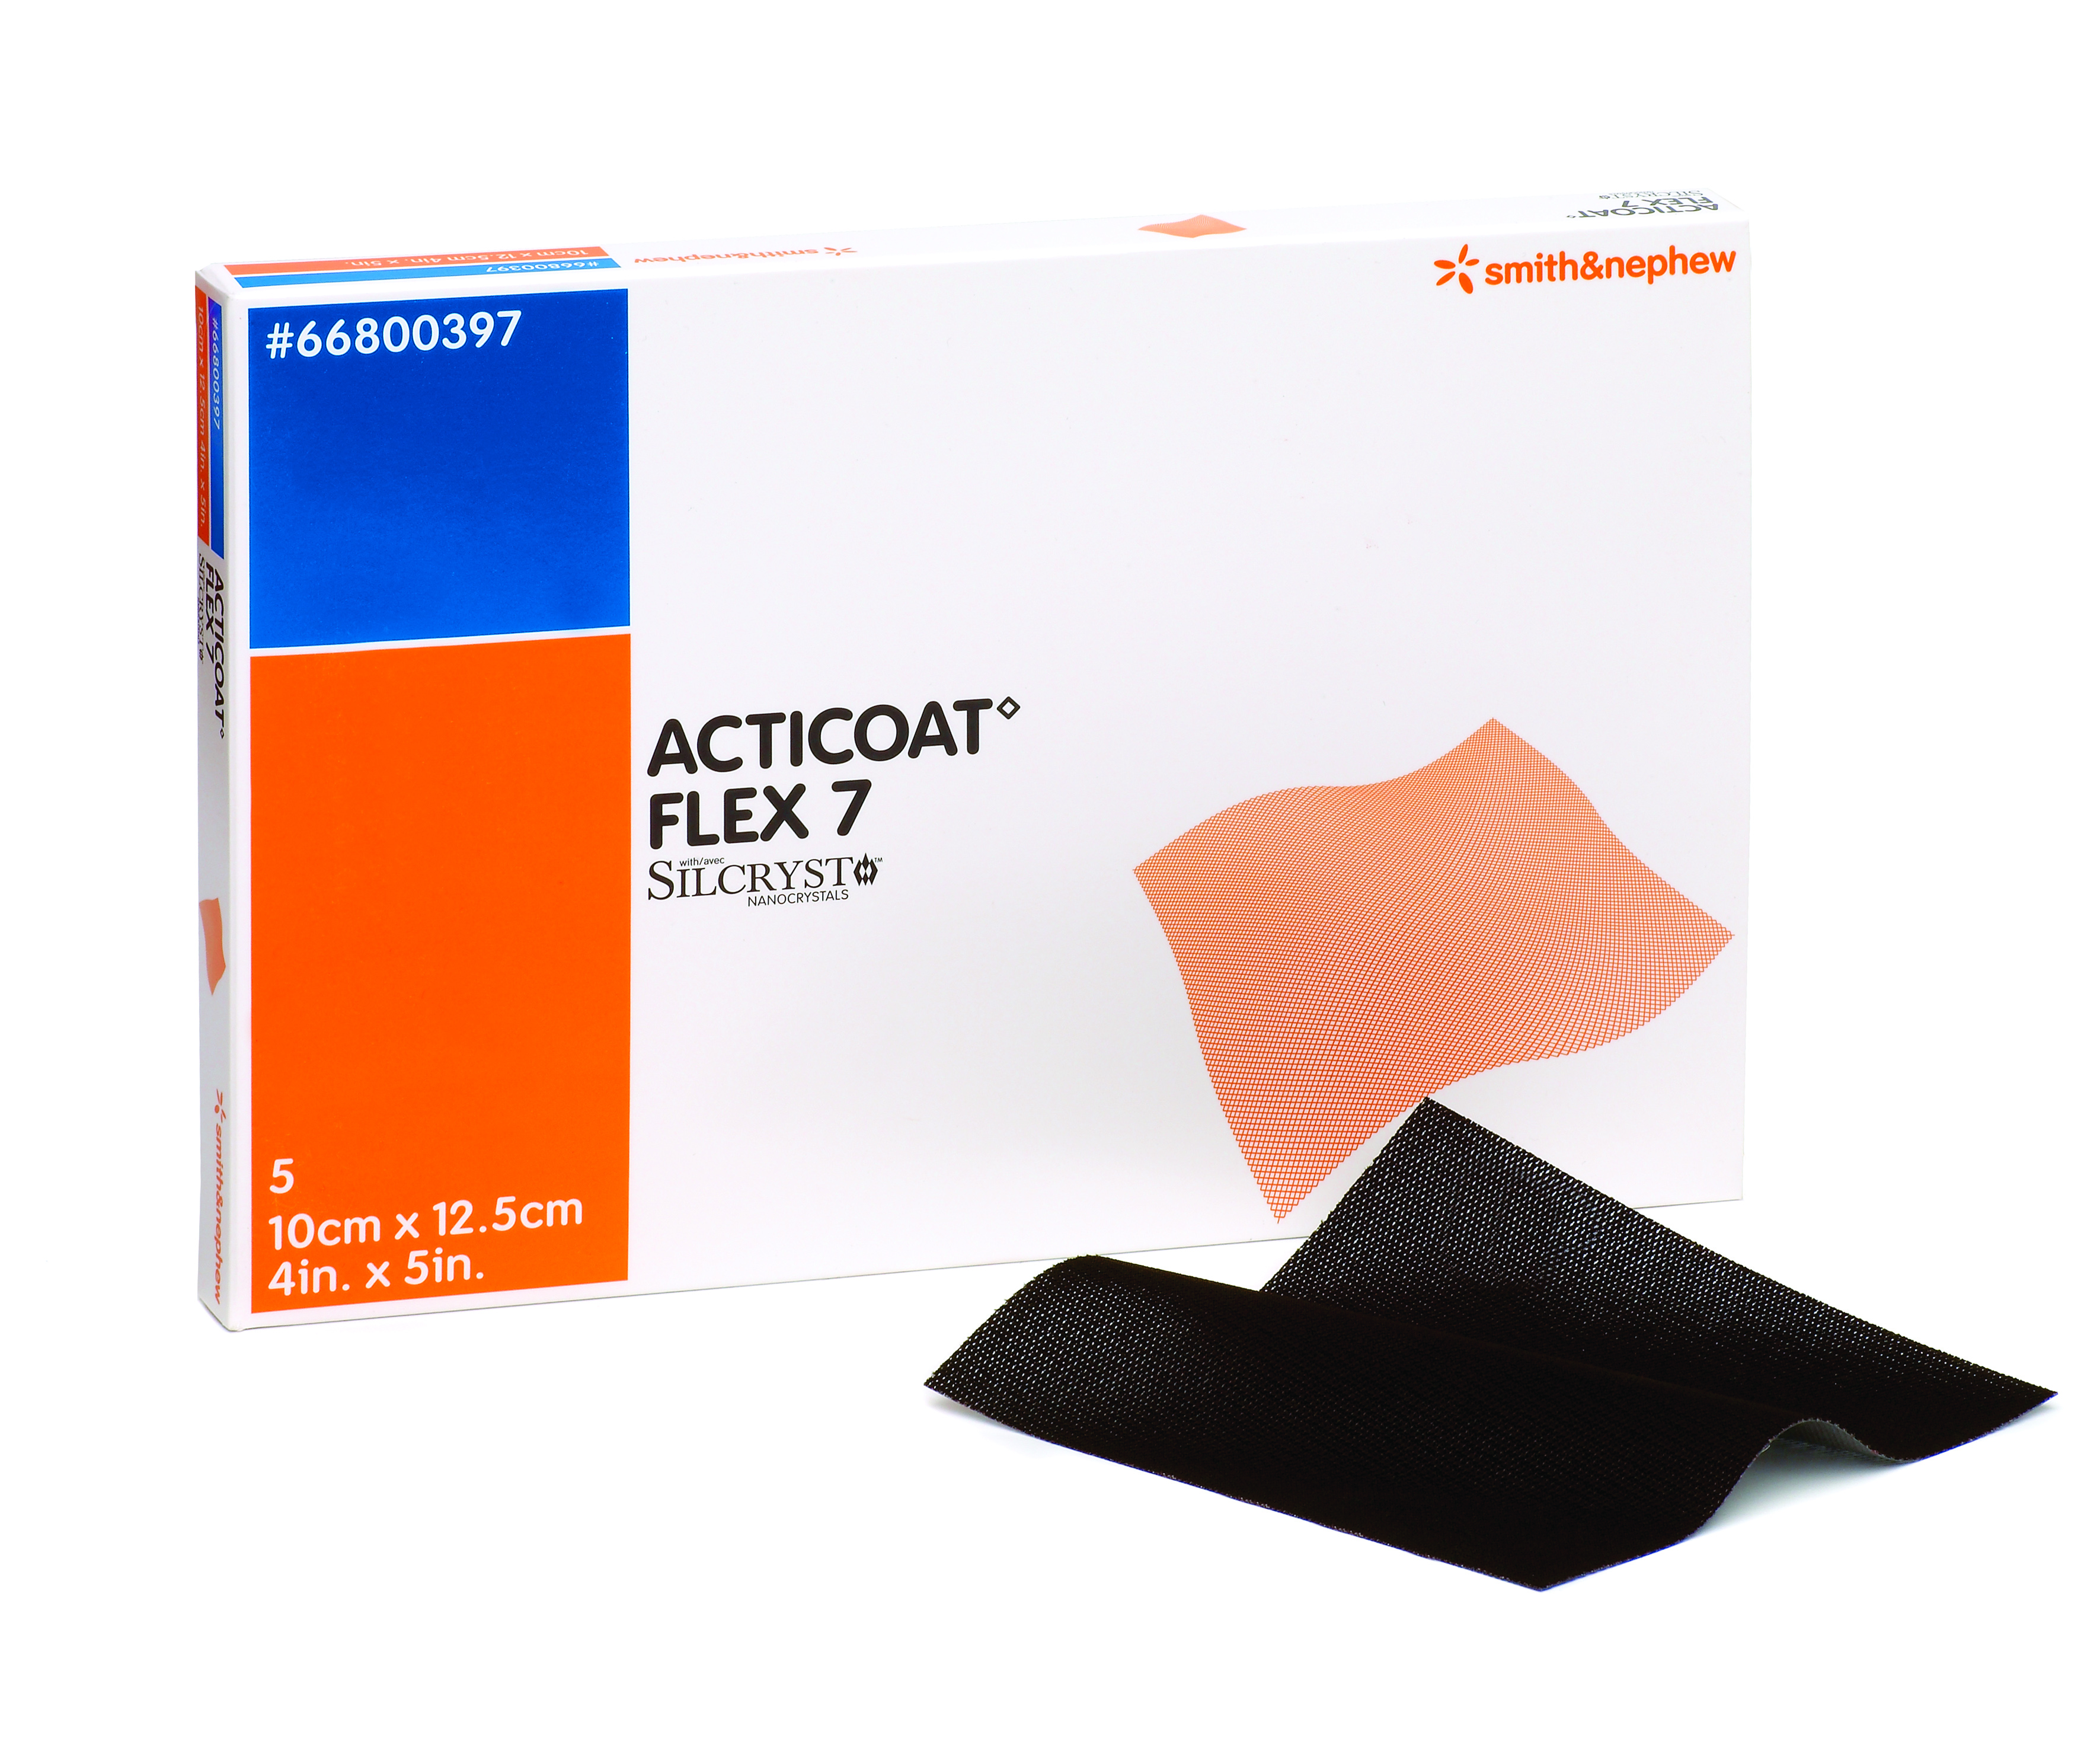 Acticoat Flex 7 Antimicrobial Dressing 5cm x 5cm image 1